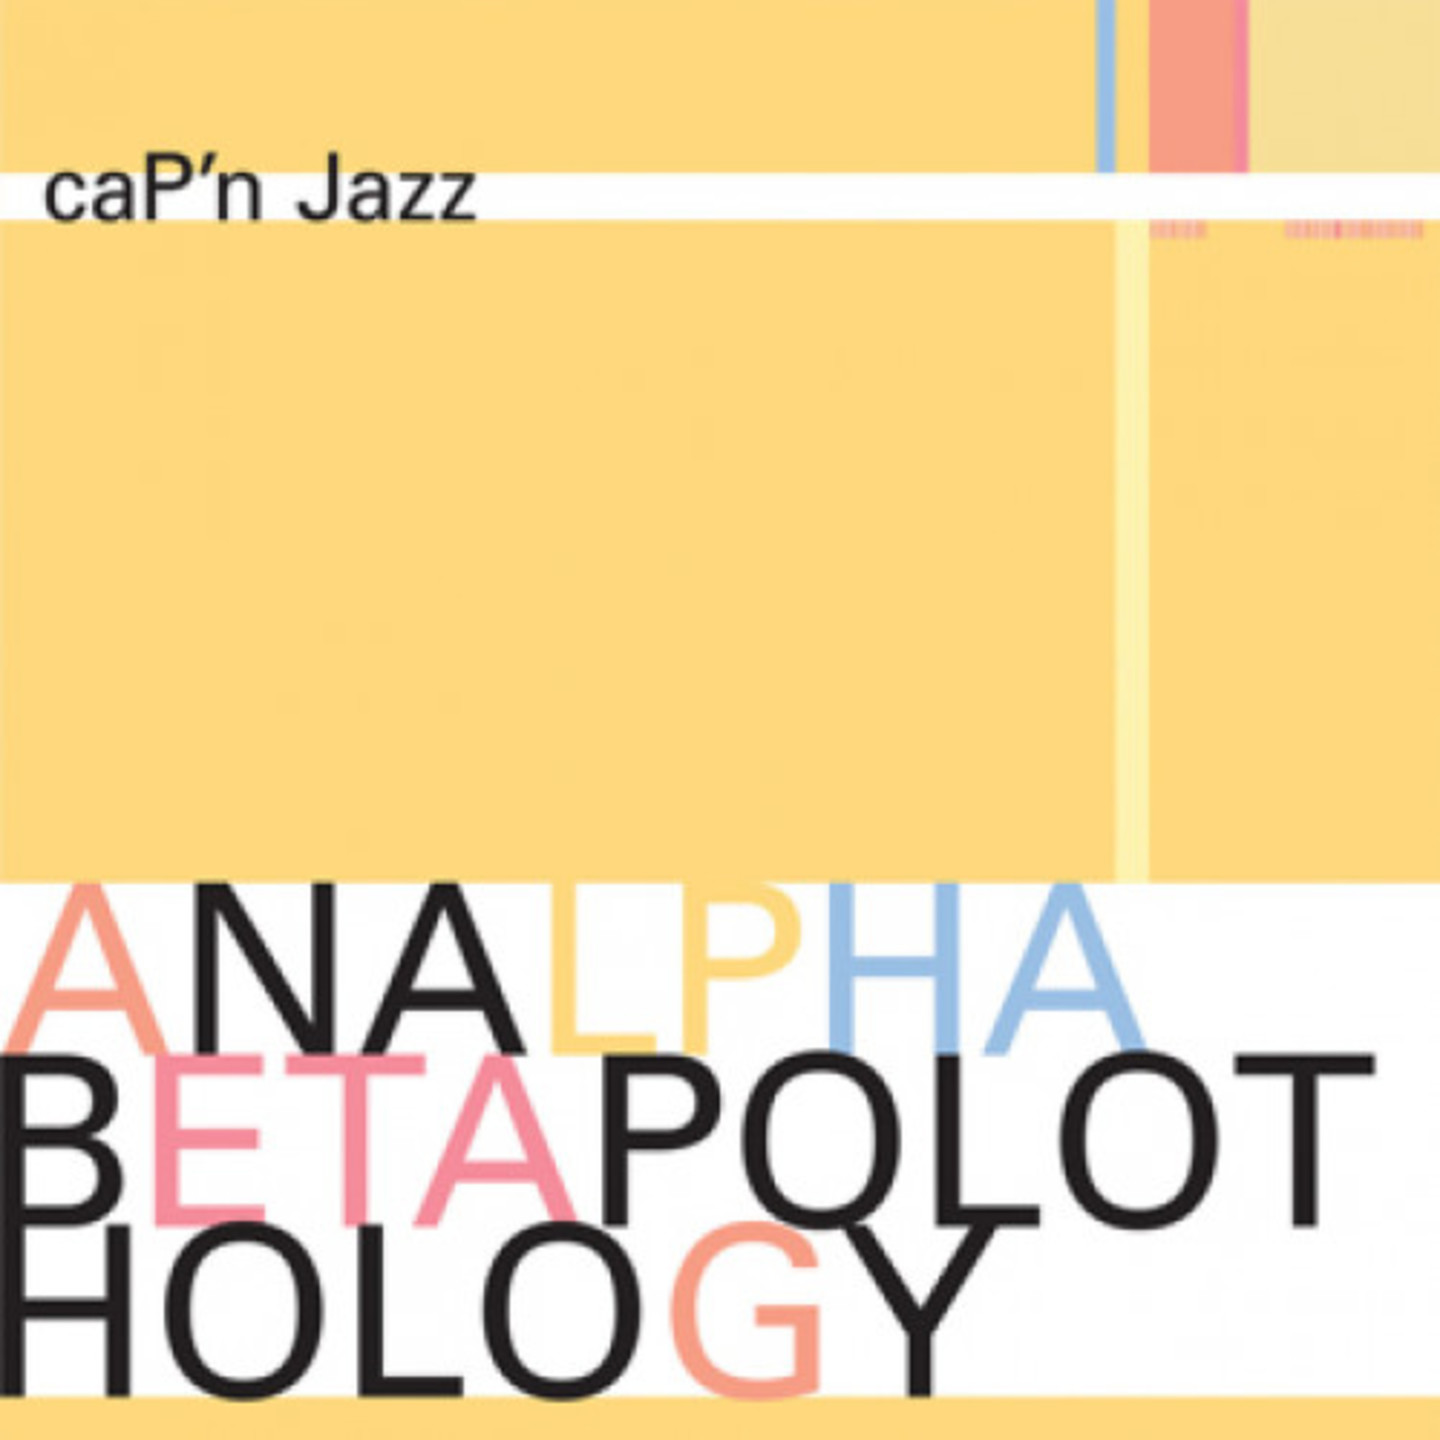 CAPN JAZZ - Analphabetapolothology 2xLP